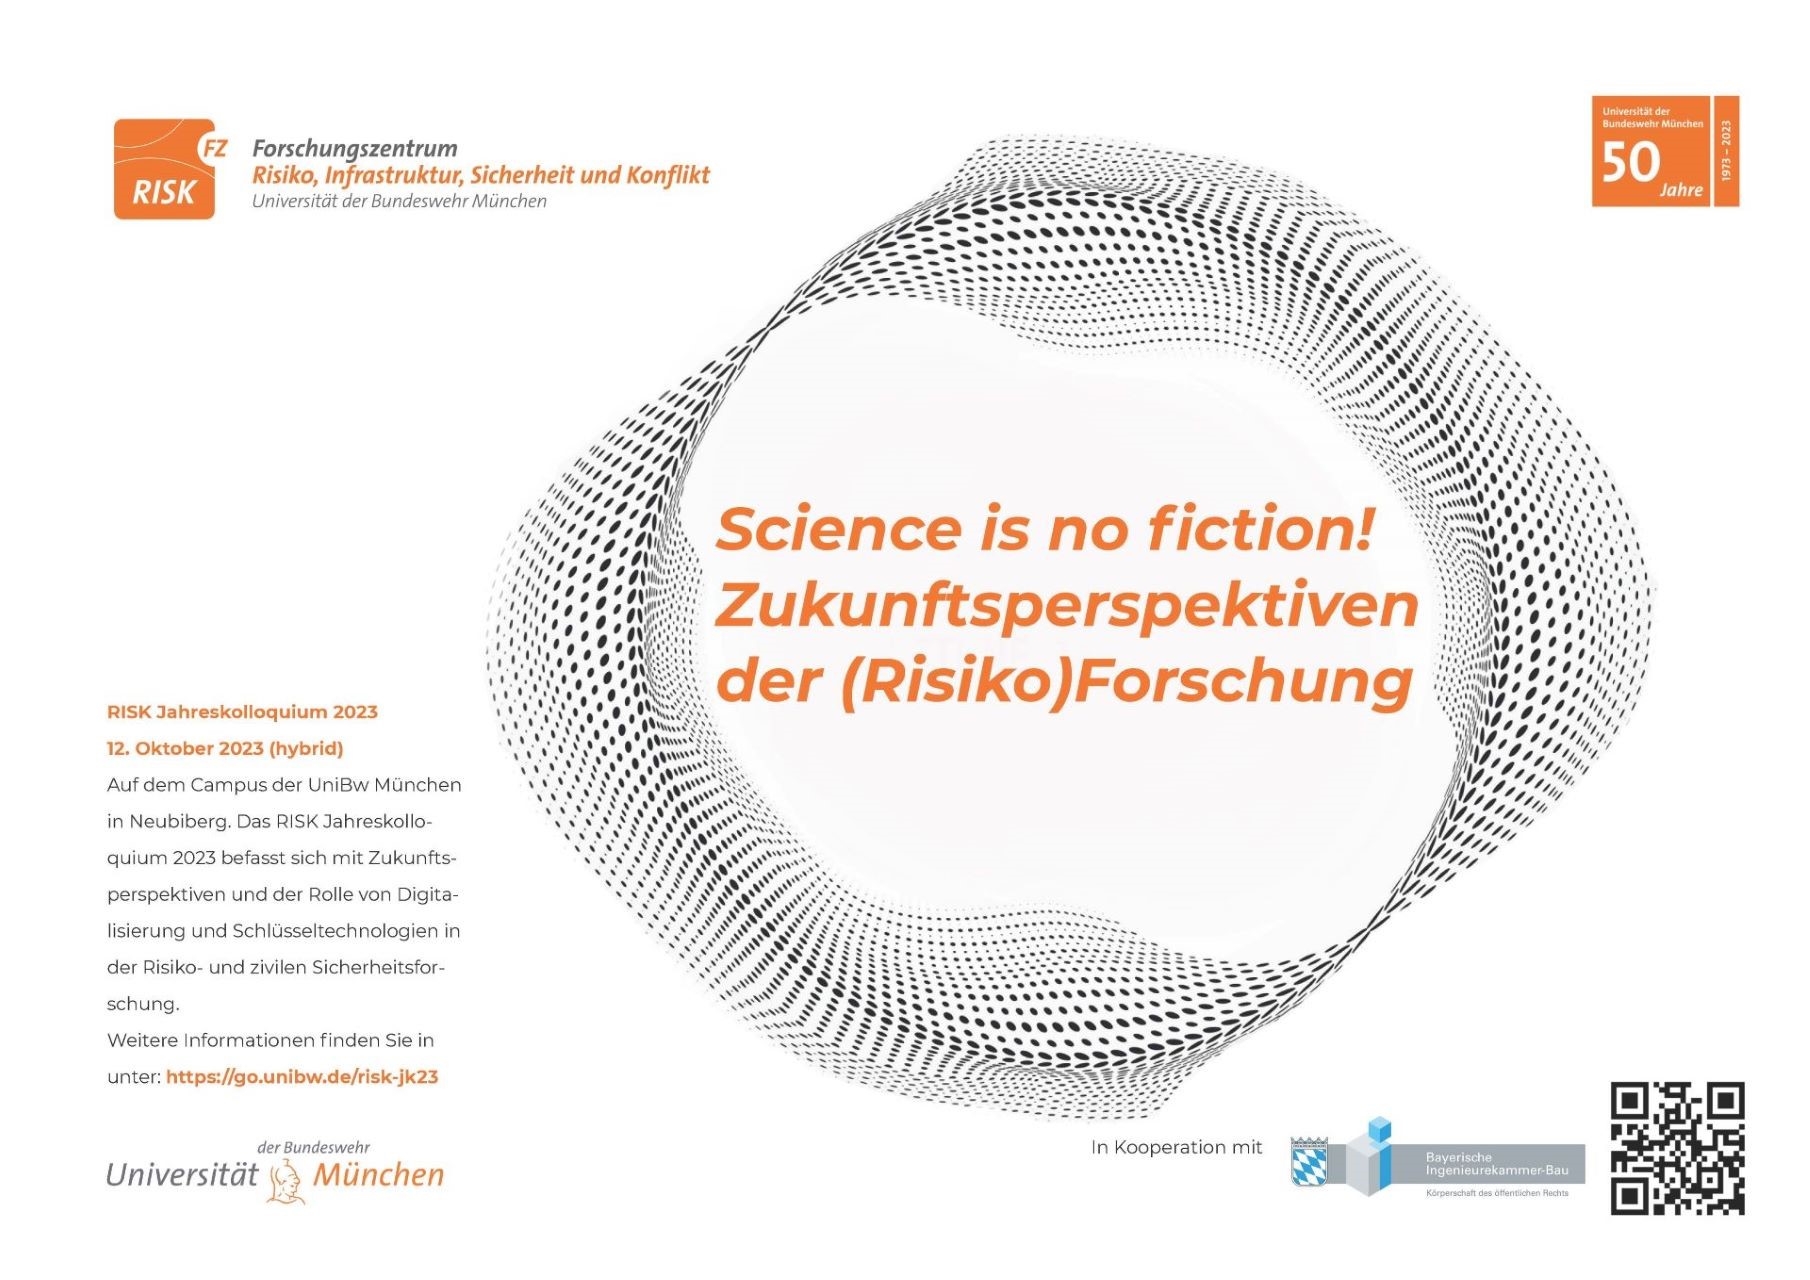 RISK Jahreskolloquium 2023: Science is no fiction! Zukunftsperspektiven der Risiko)forschung